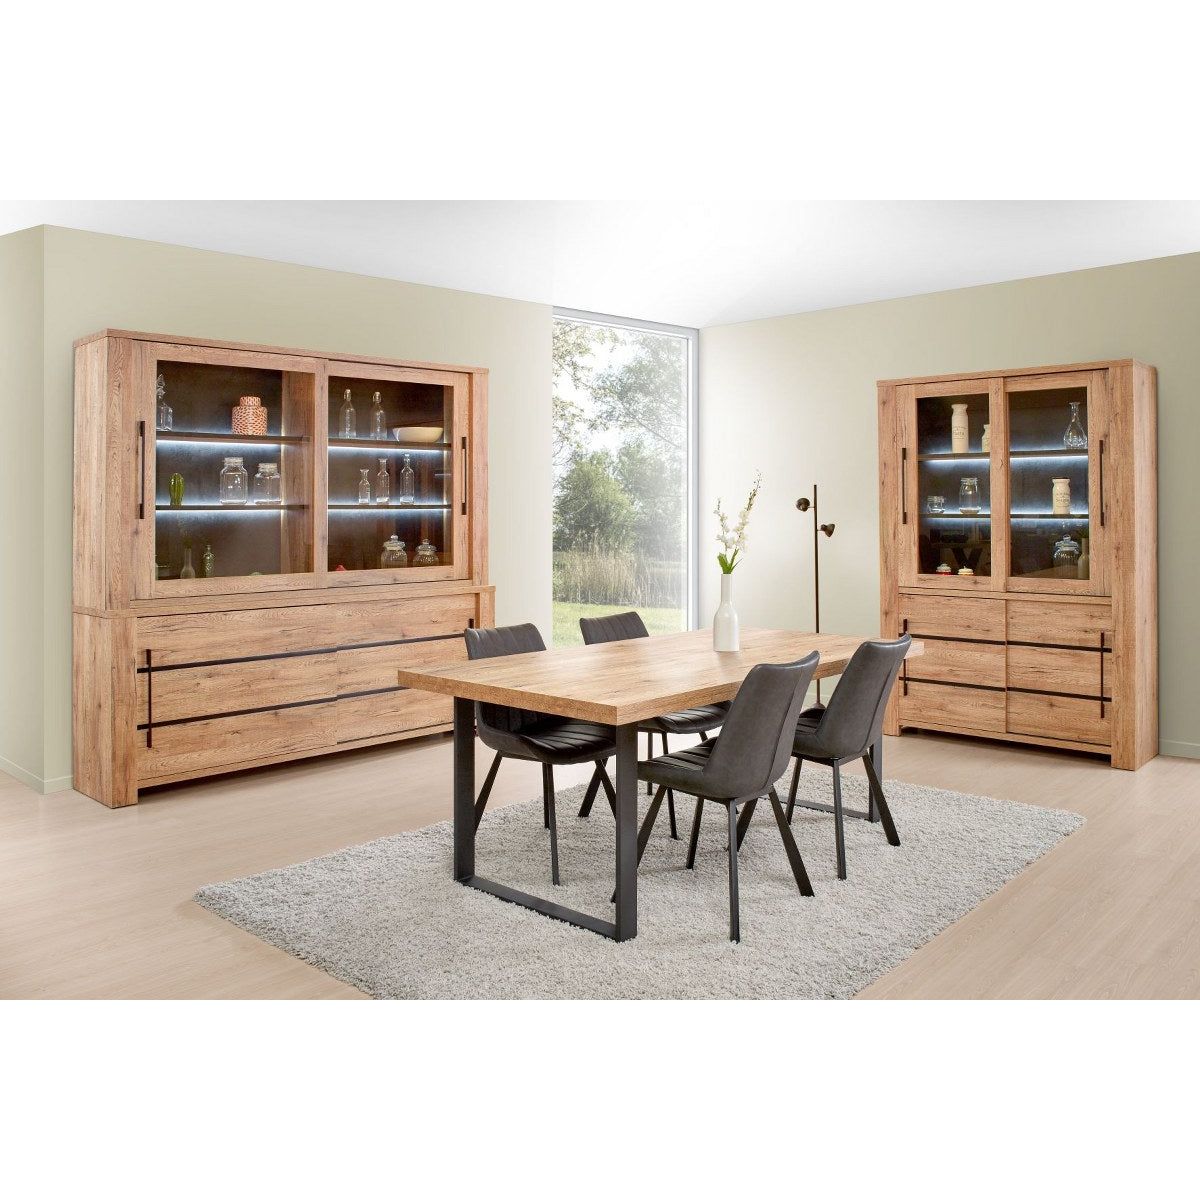 TV cabinet | Furniture series Basto | brown, natural | 150x48x